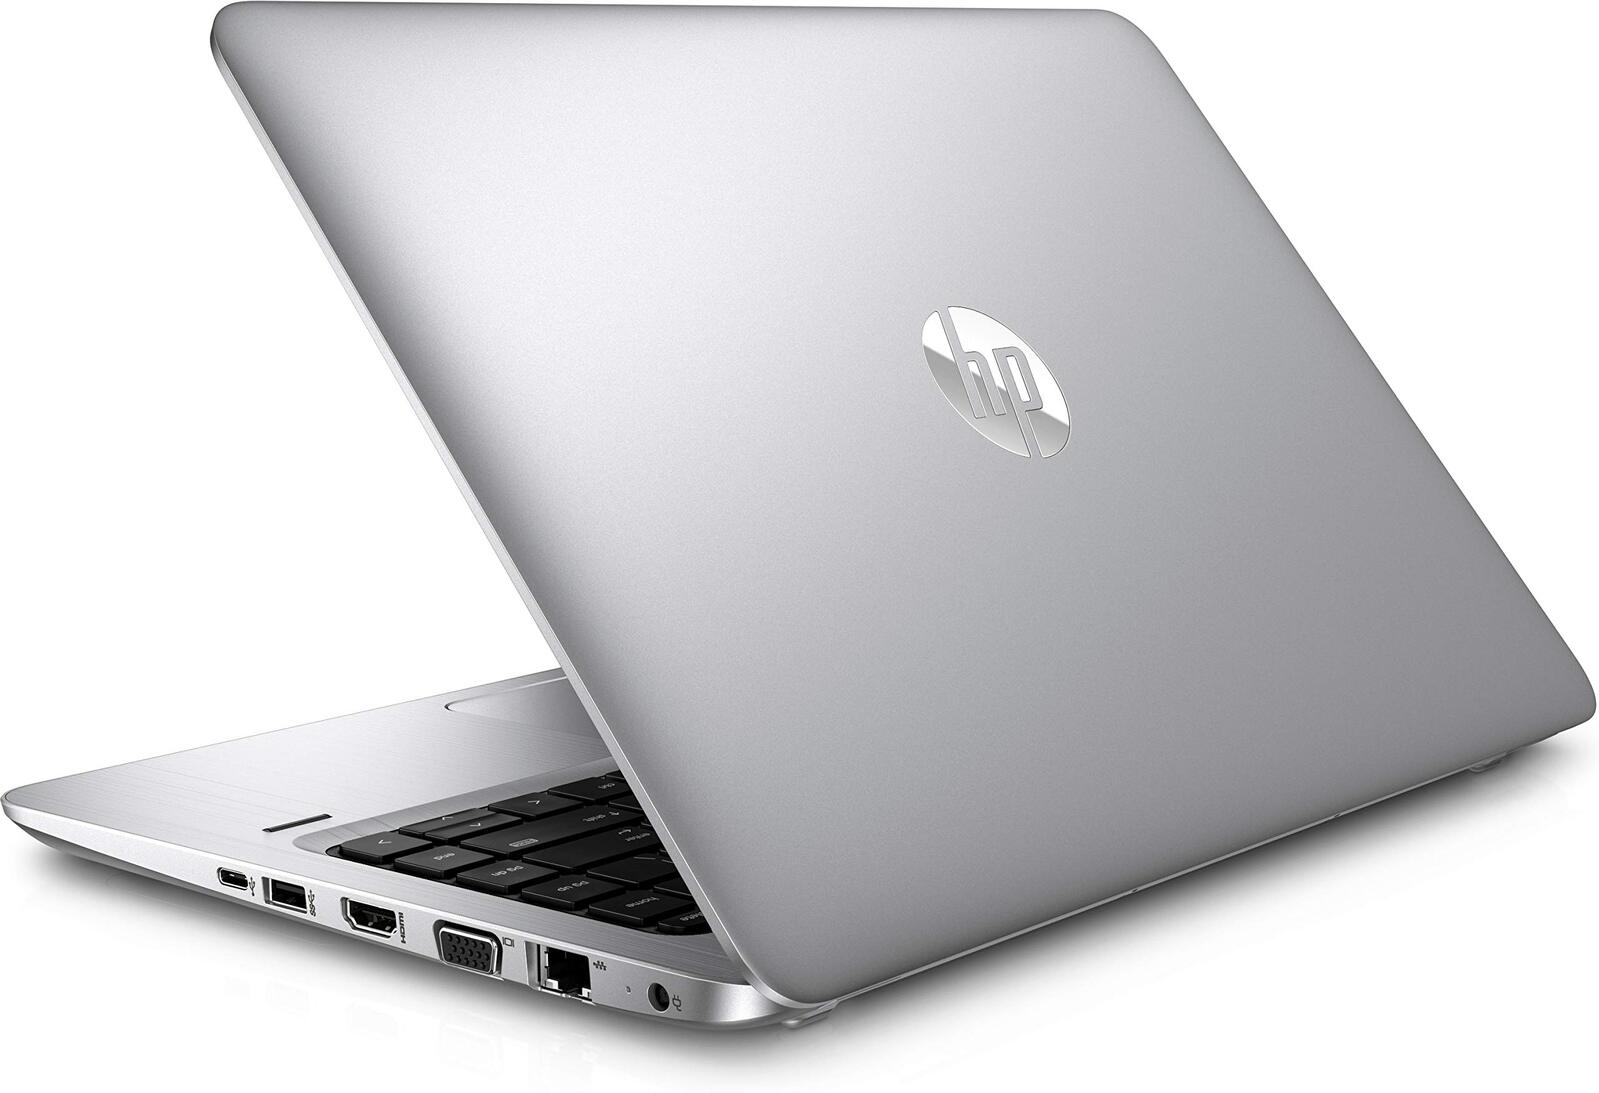 HP ProBook 430 G4 Intel i5 7200U 2.50GHz 8GB RAM 256GB SSD 13.3" Win 10 Image 2